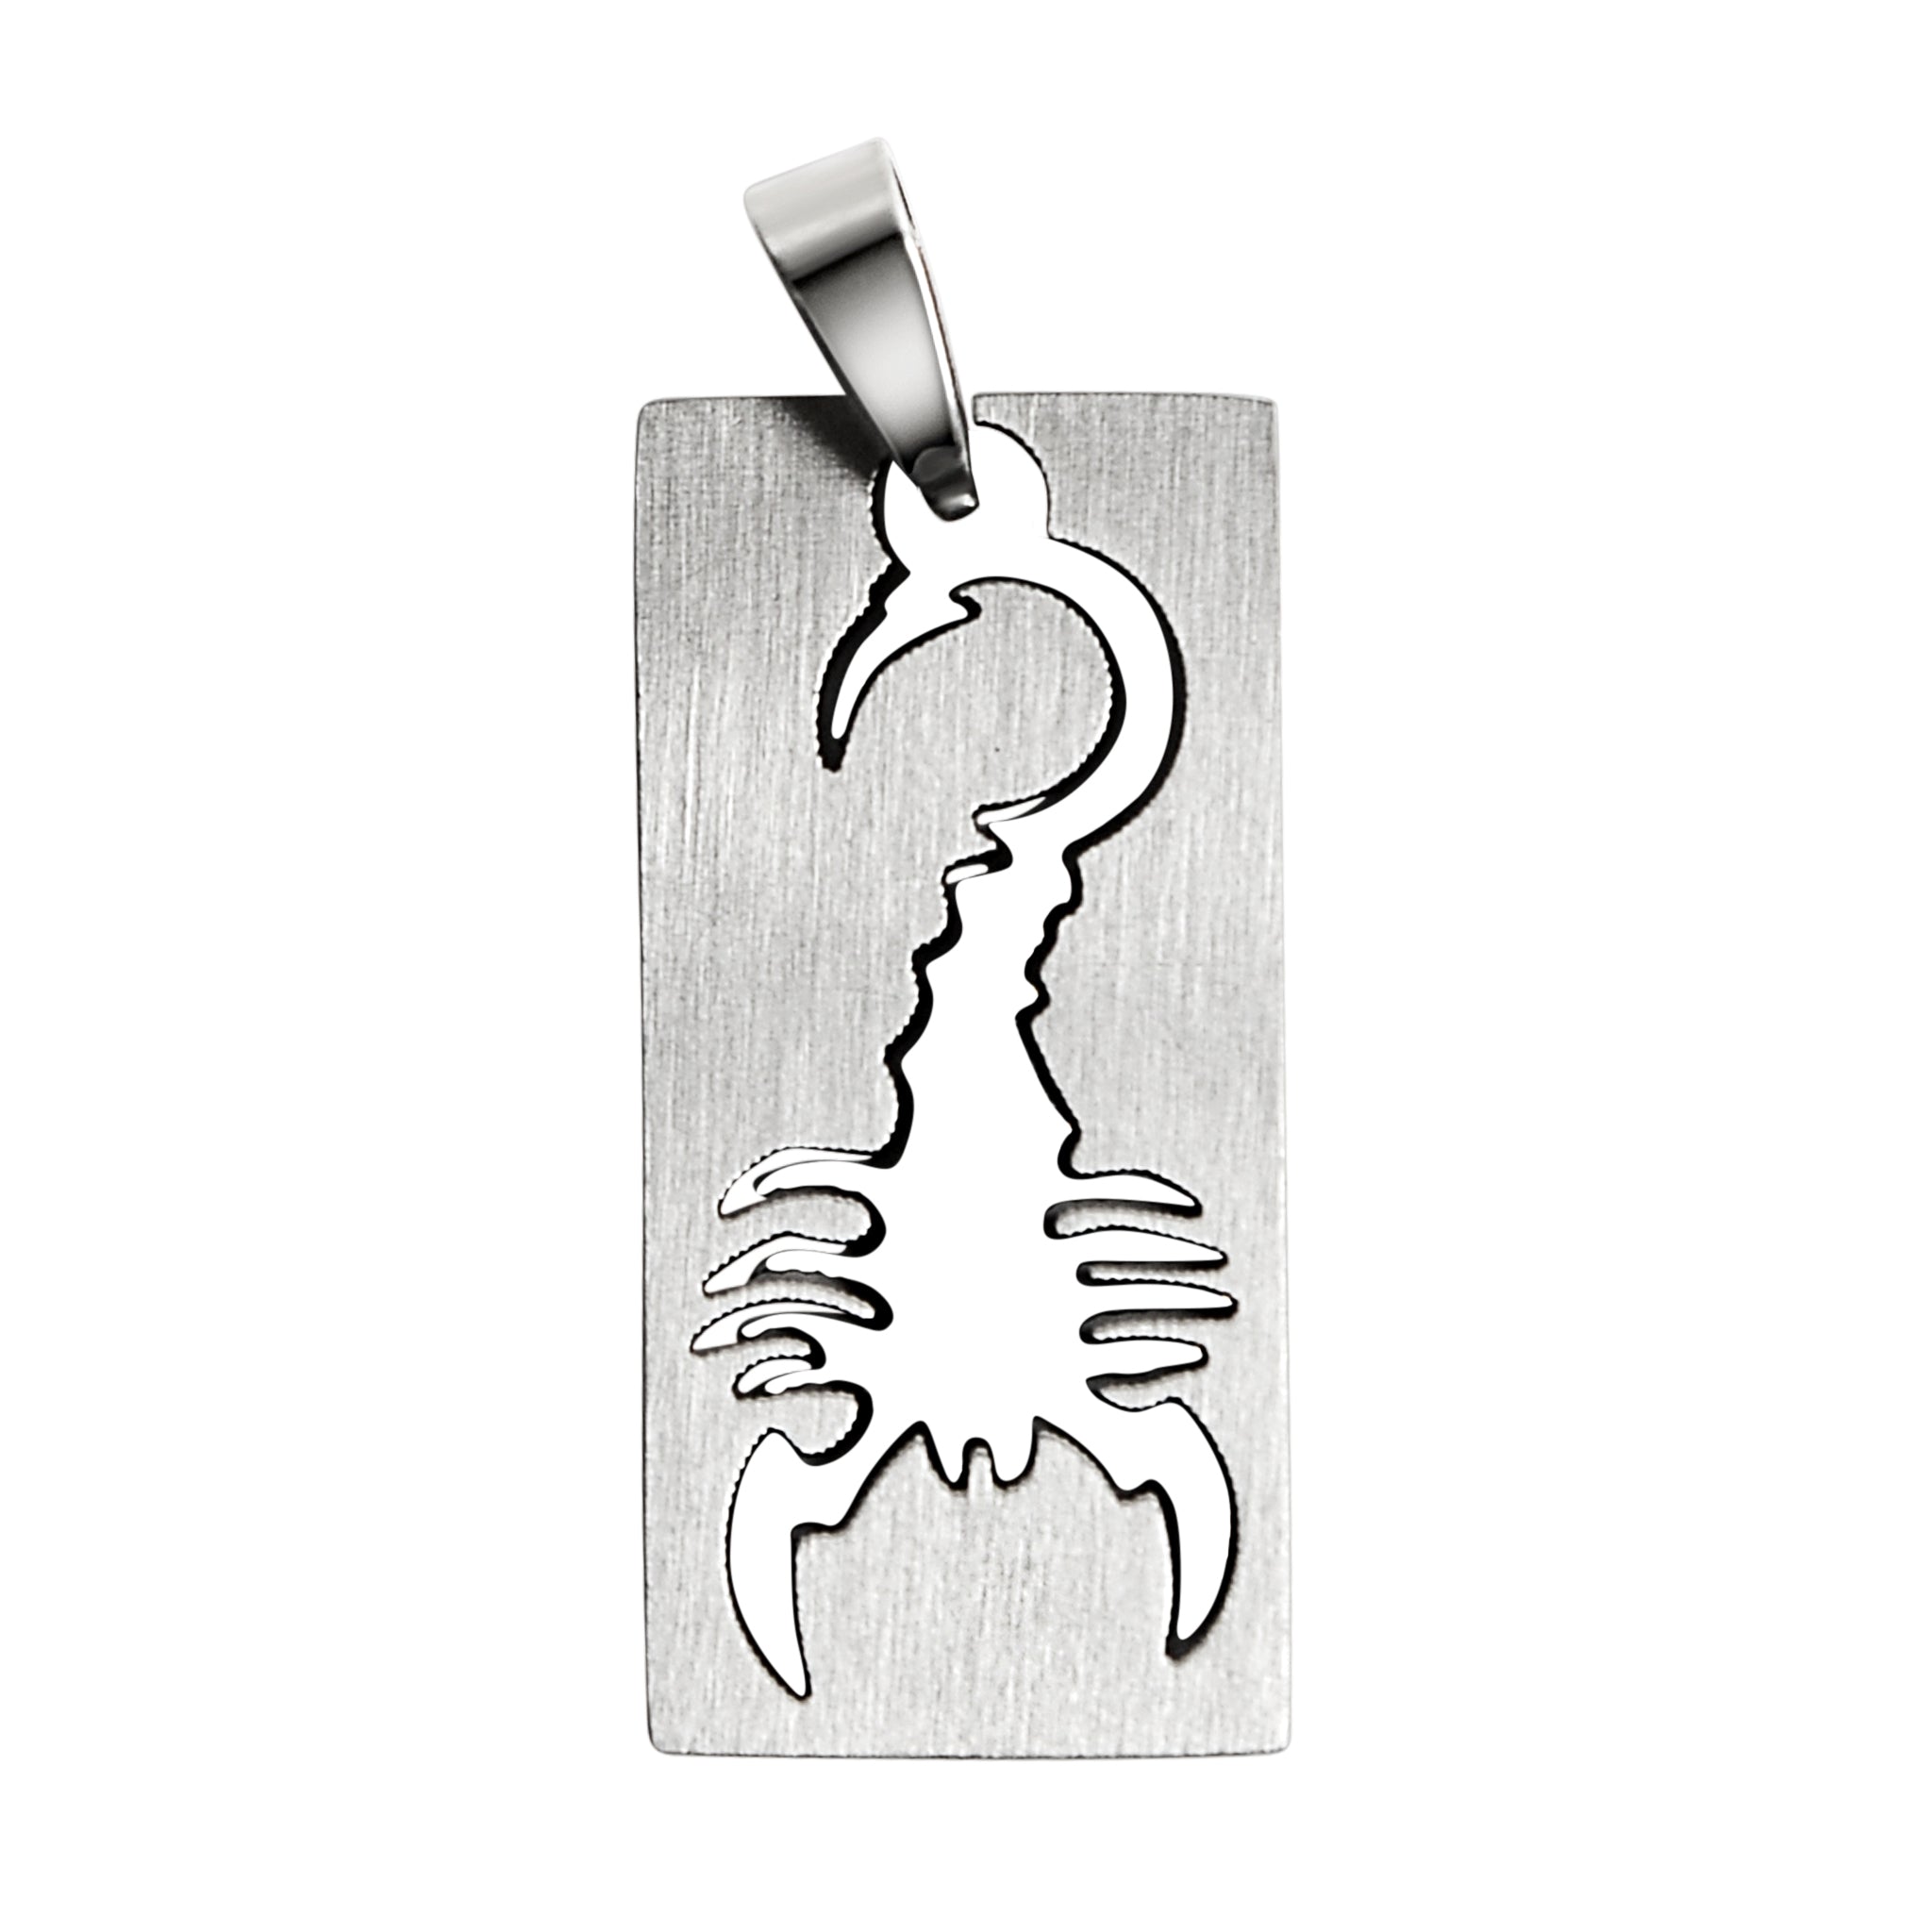 Stainless steel cutout scorpion pendant.